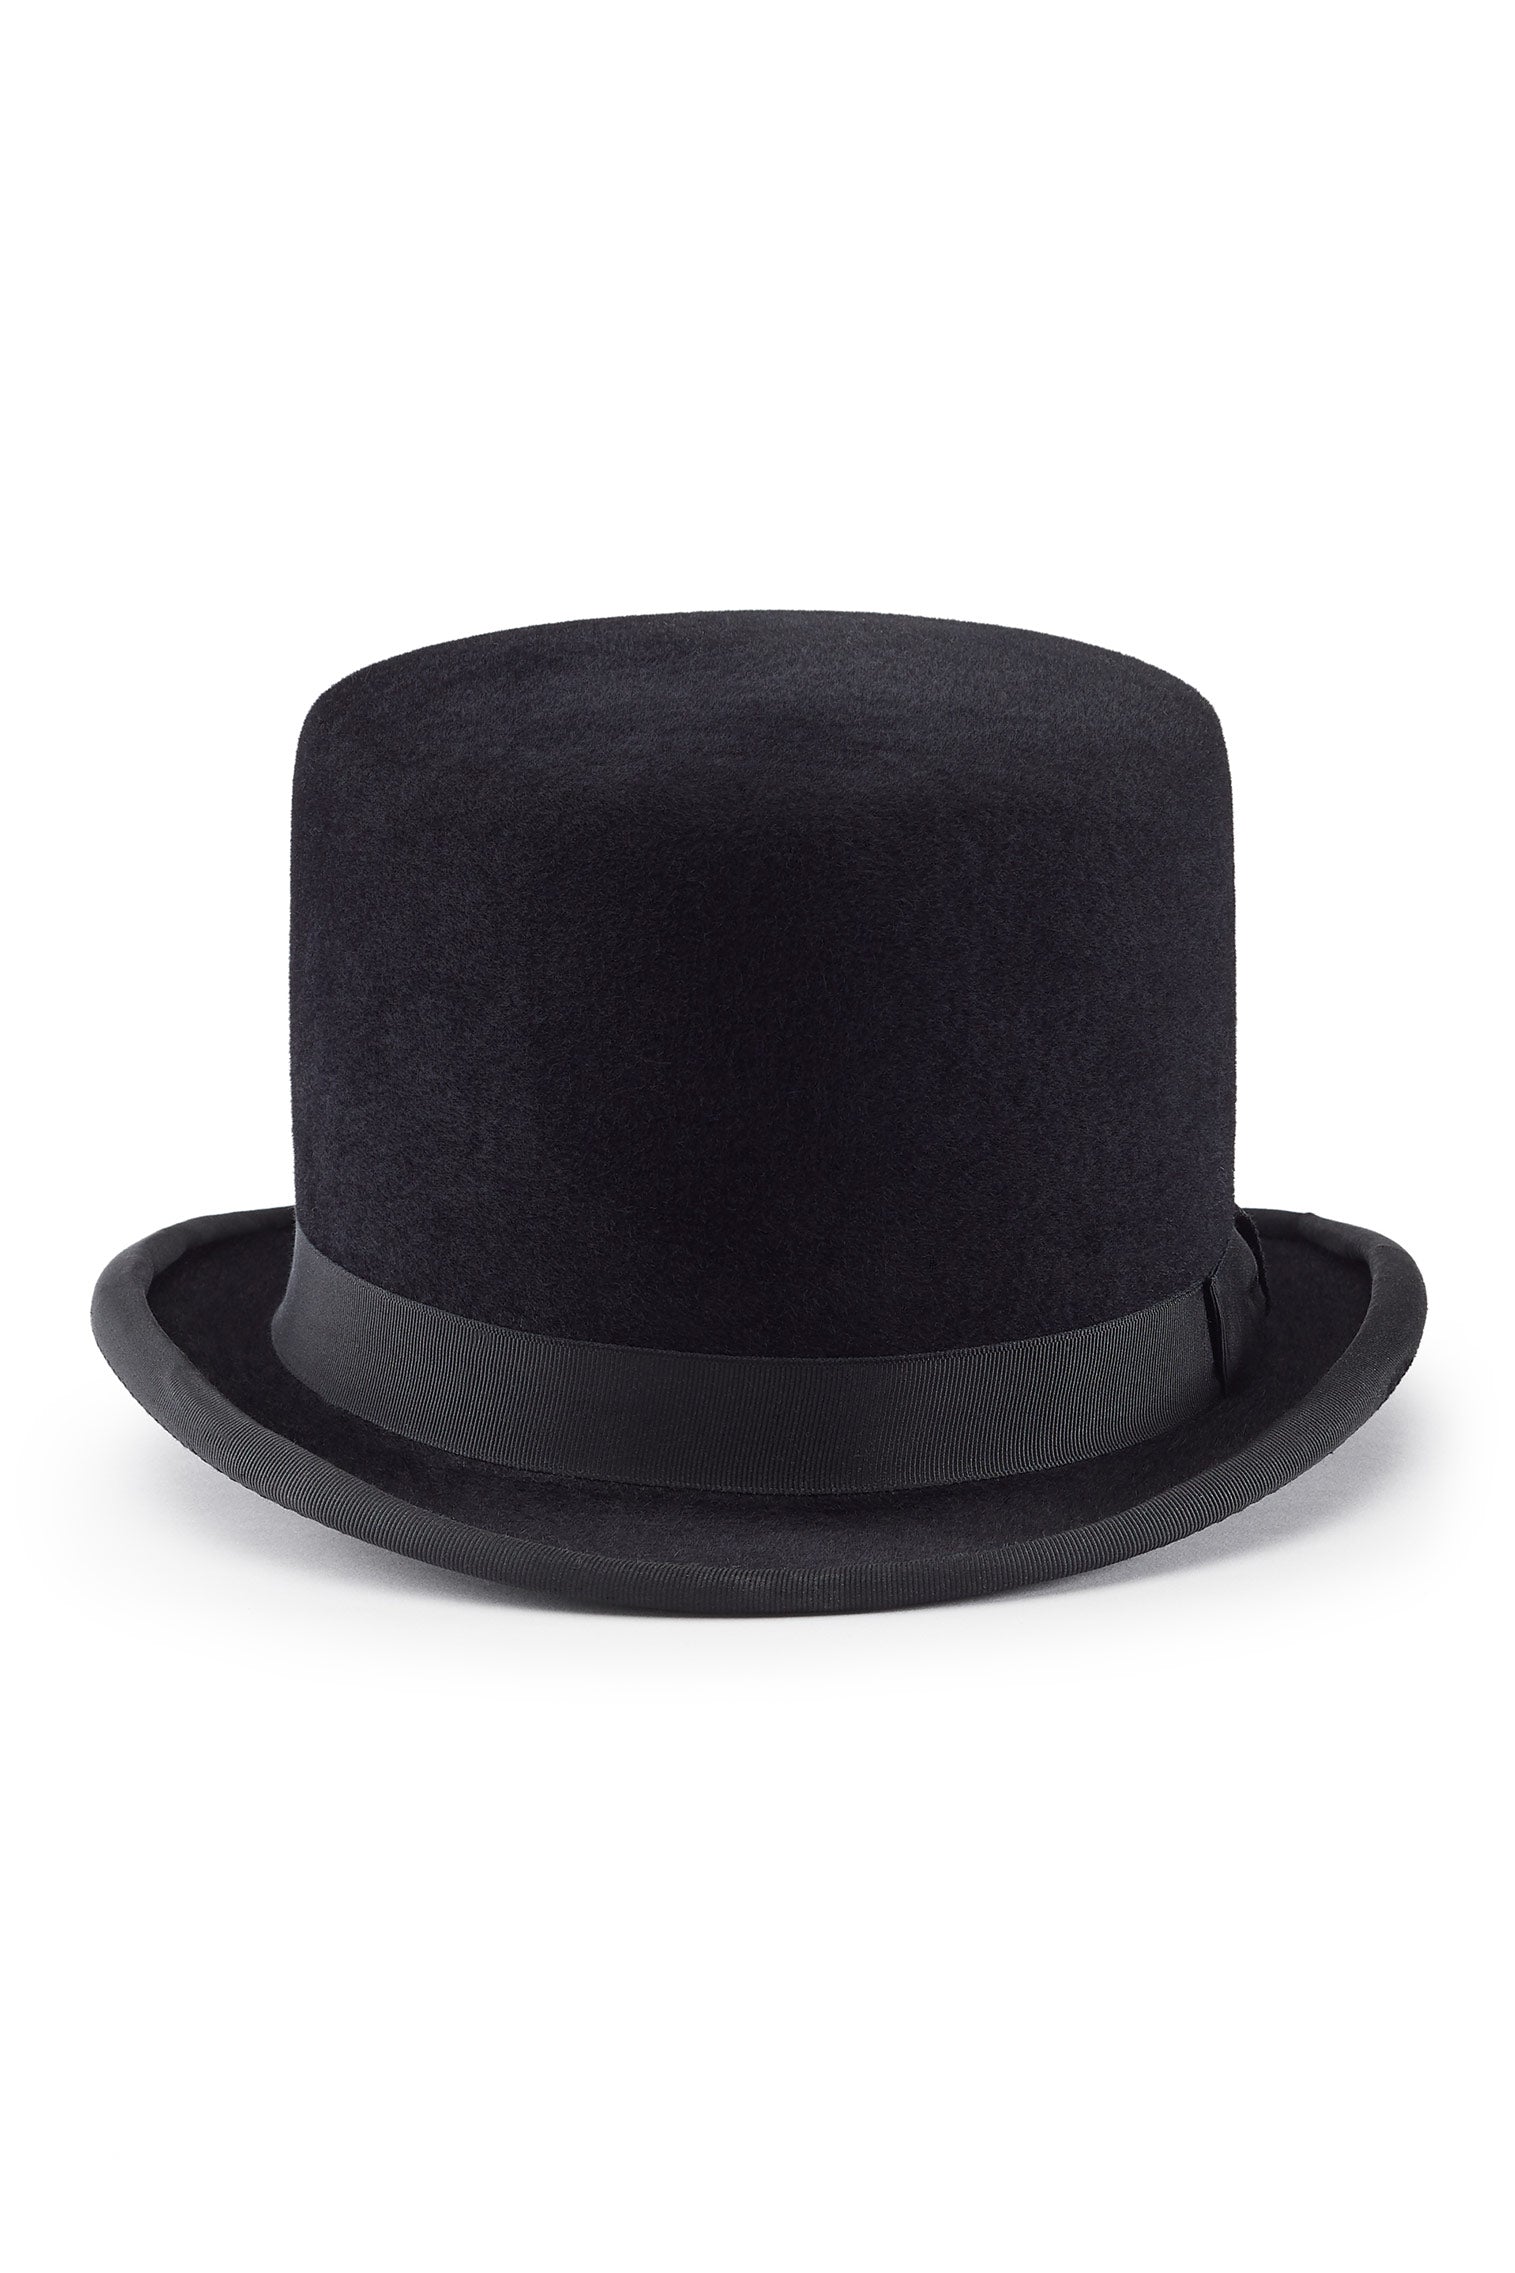 Cambridge Bowler Hat - Lock & Co. Hats for Men & Women. Hats for Men ...